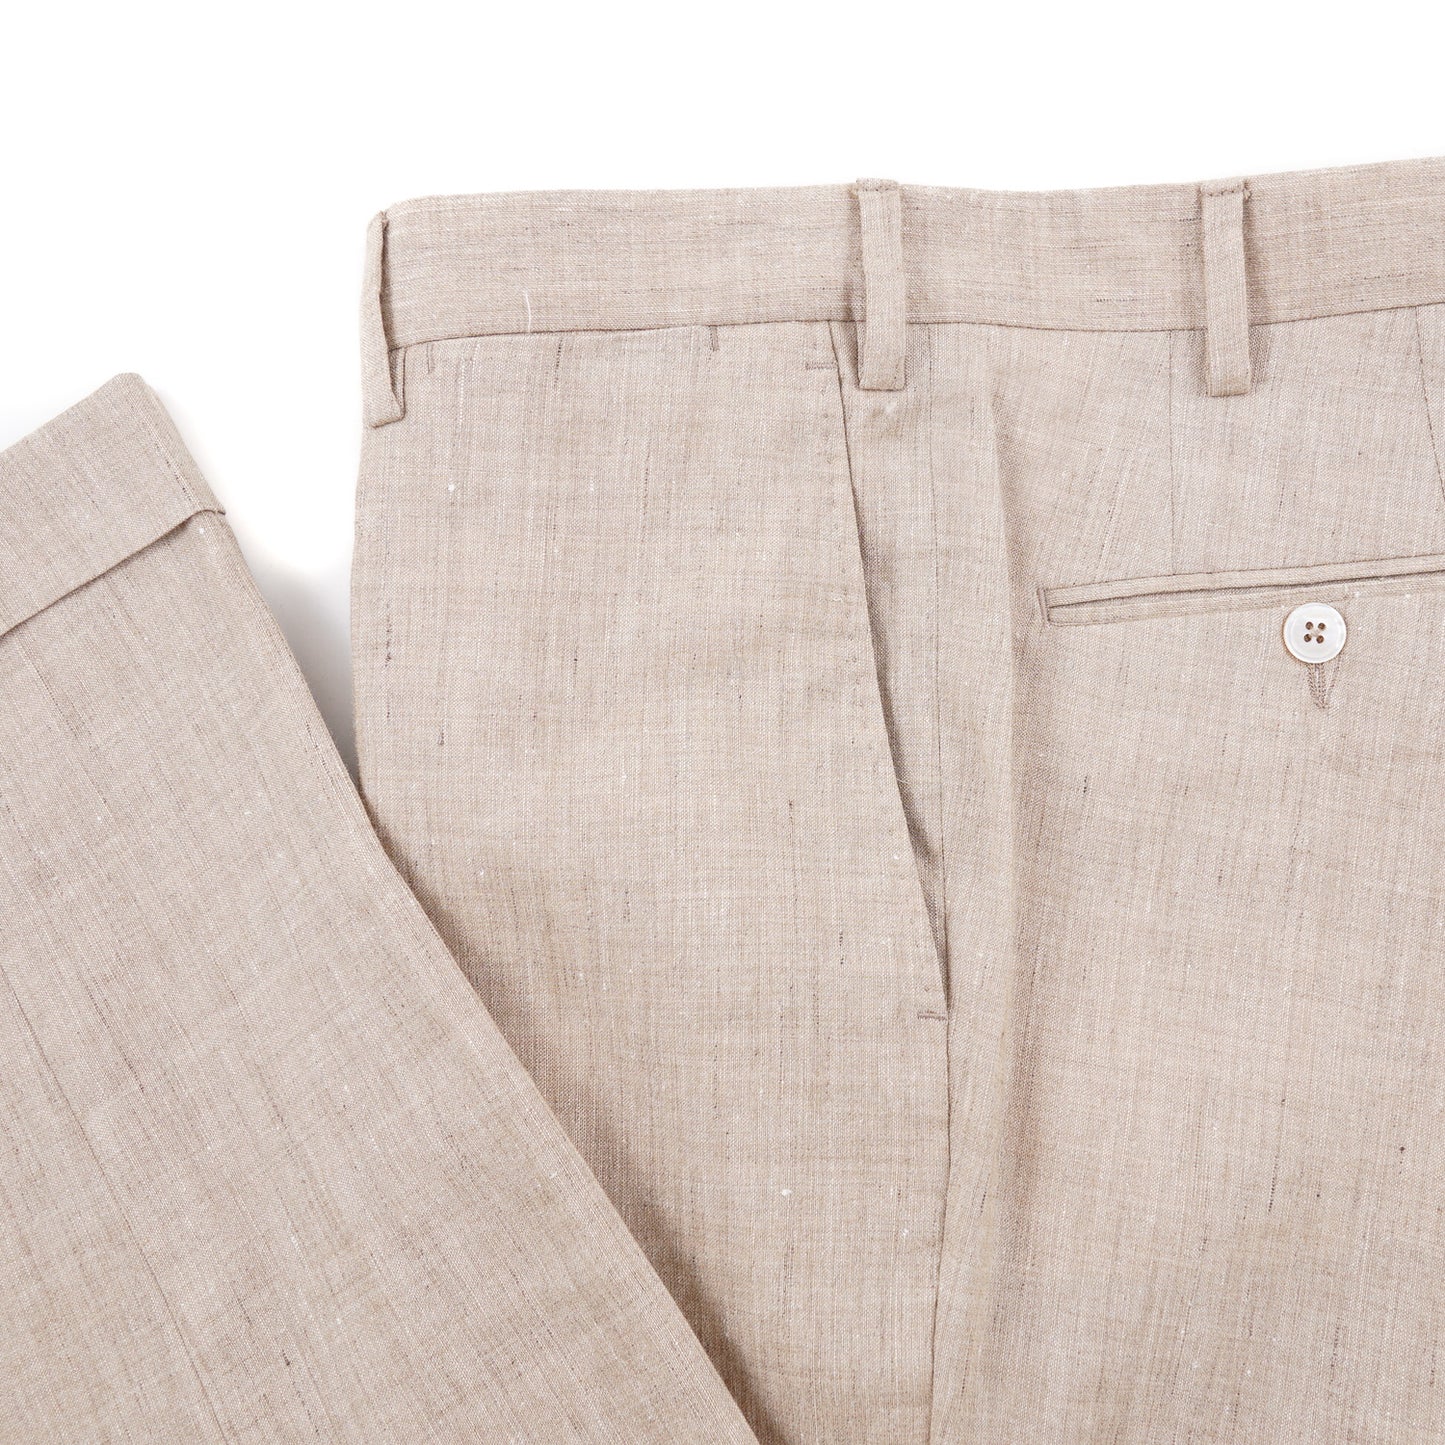 Marco Pescarolo Cashmere and Linen Pants - Top Shelf Apparel